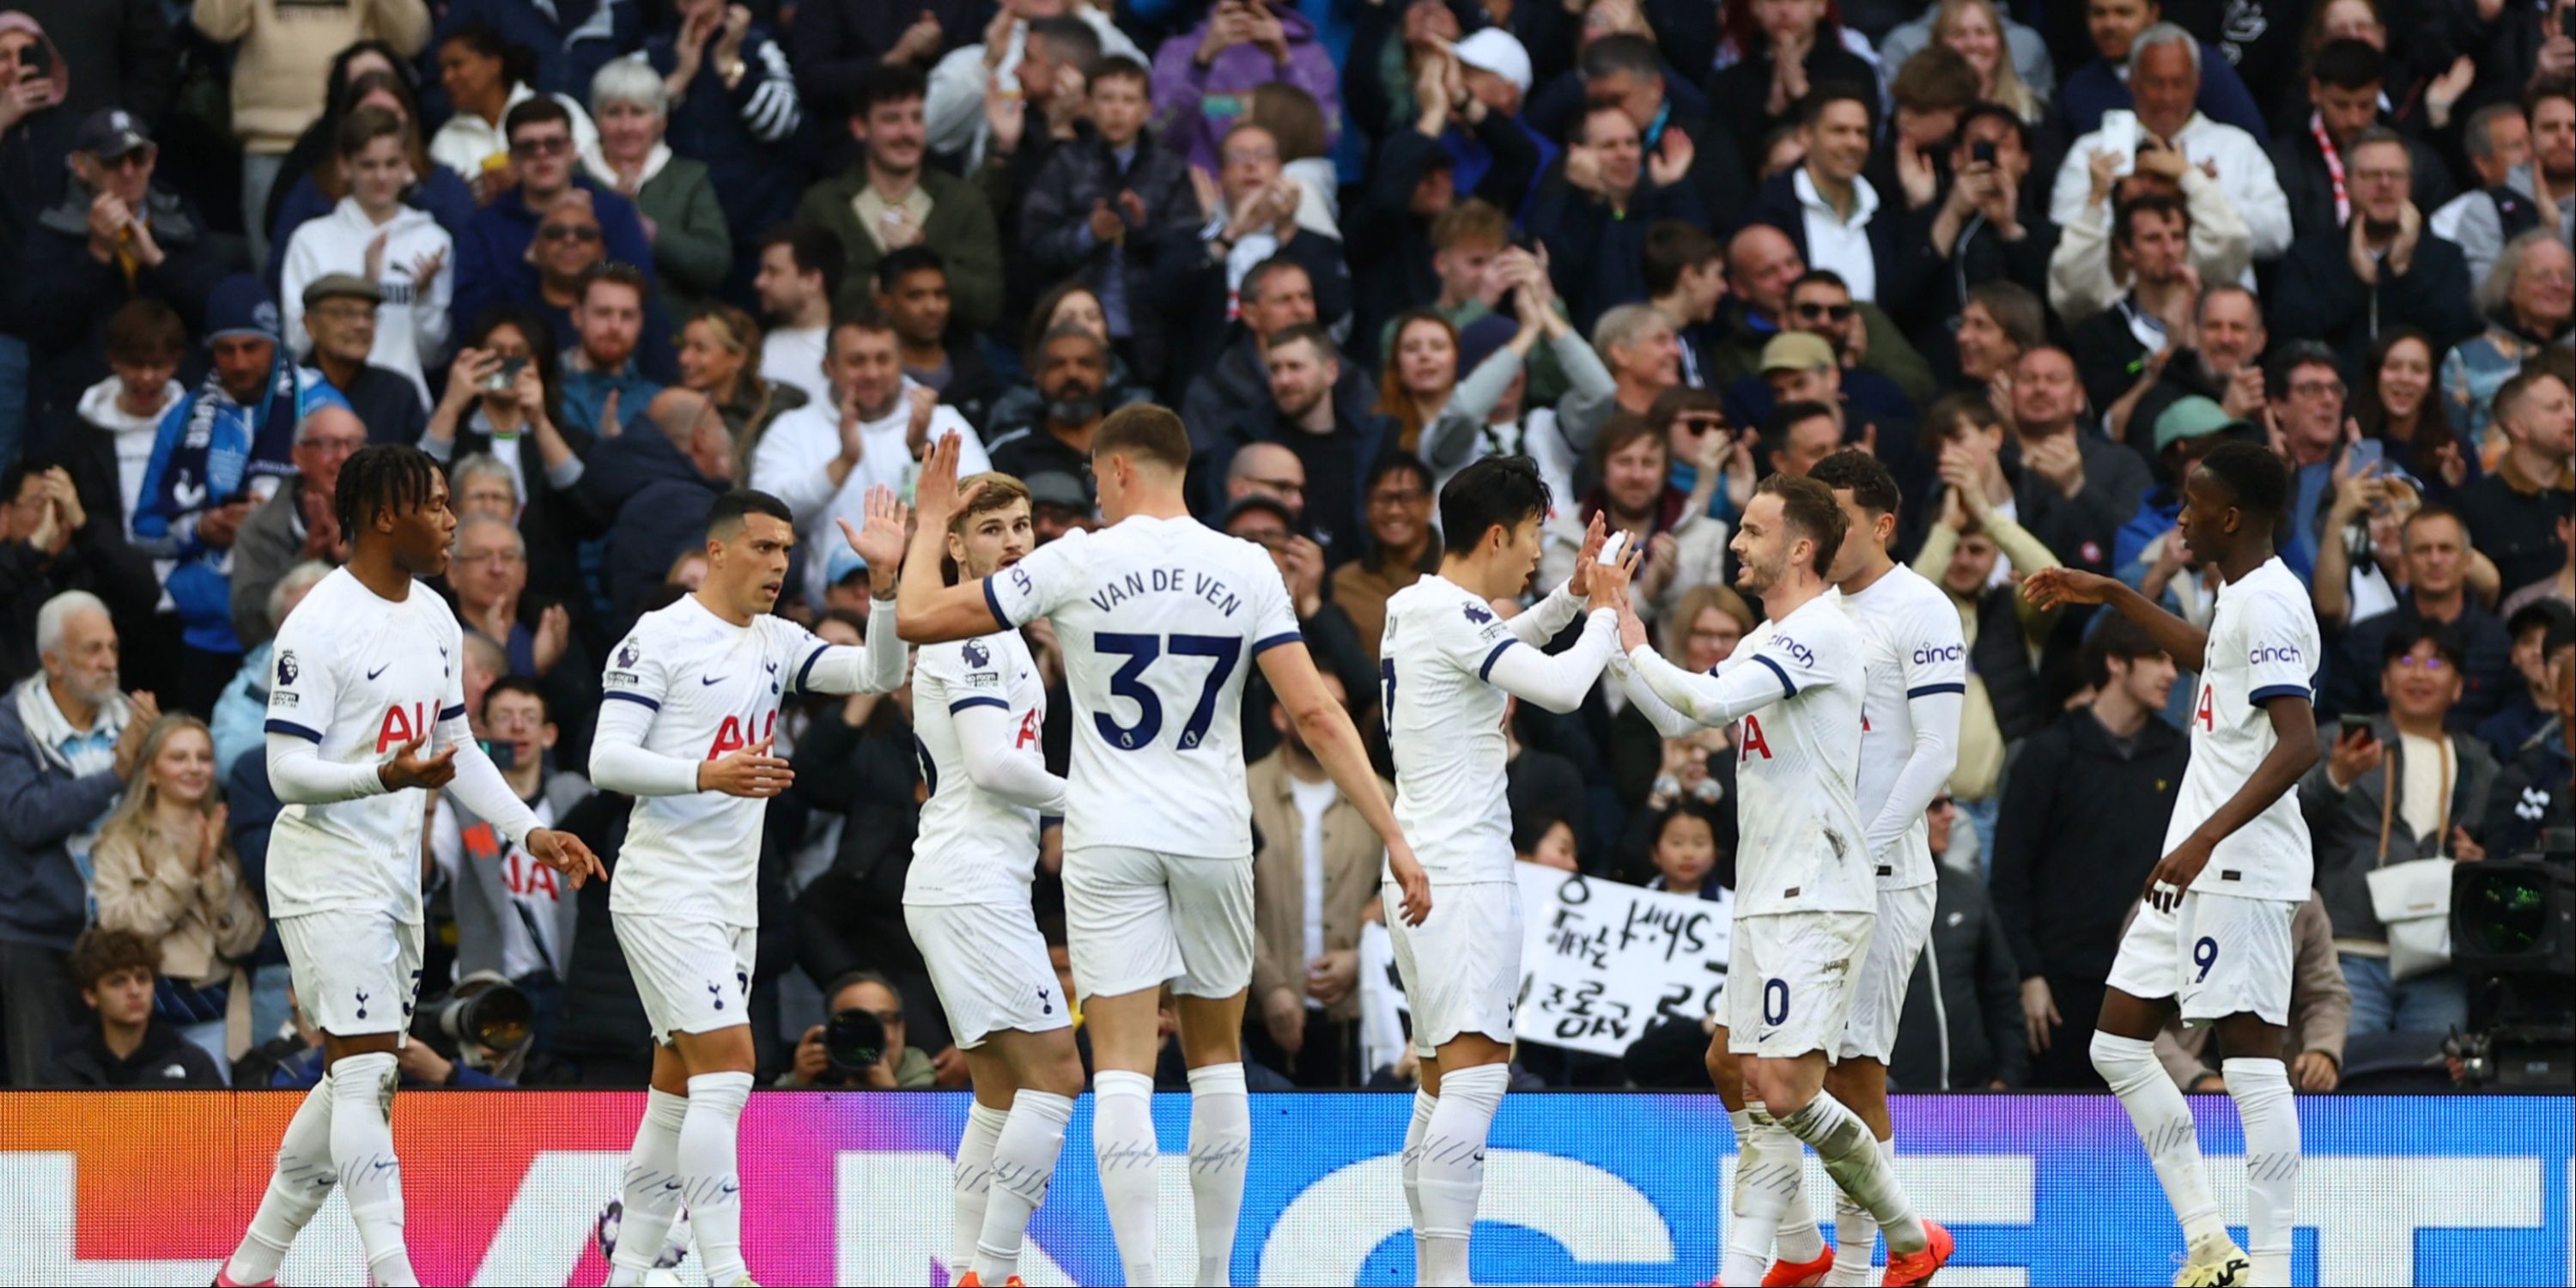 Tottenham's New Star: Van de Ven's Remarkable Impact on Spurs' Season